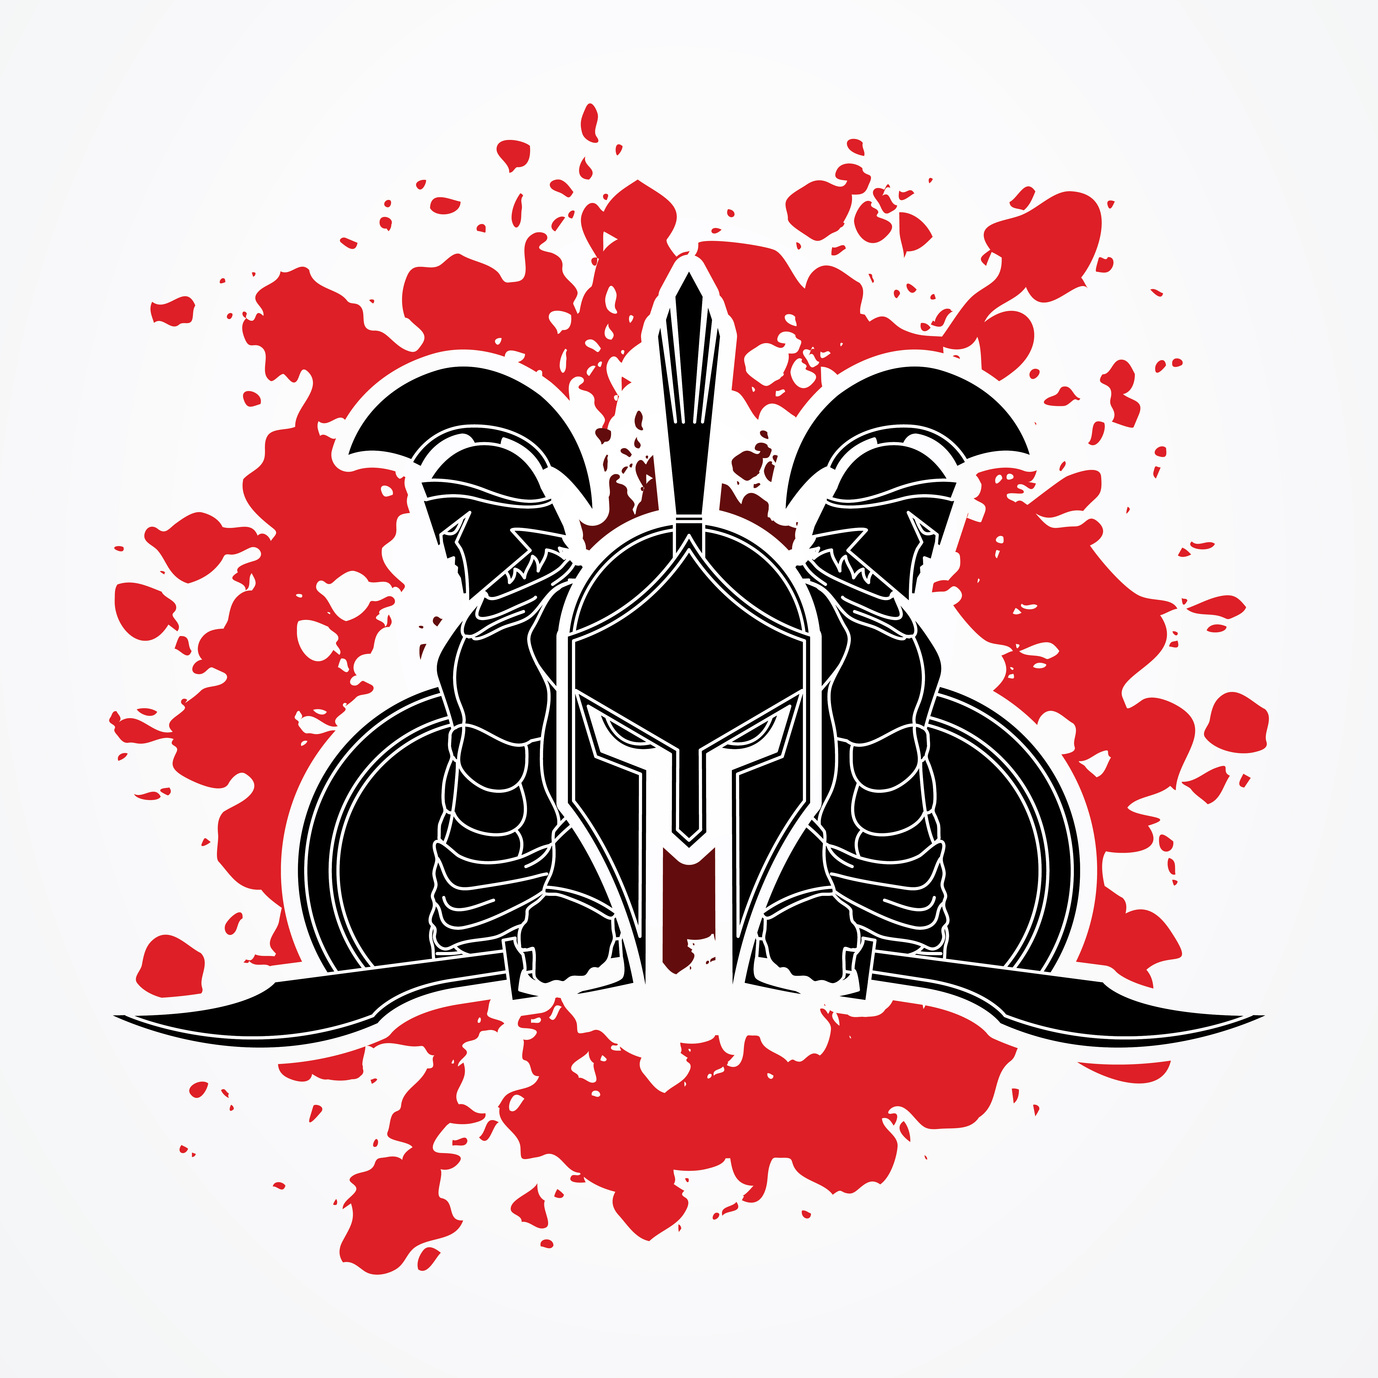 Spartan warrior pose designed on splatter blood background graphic vector.